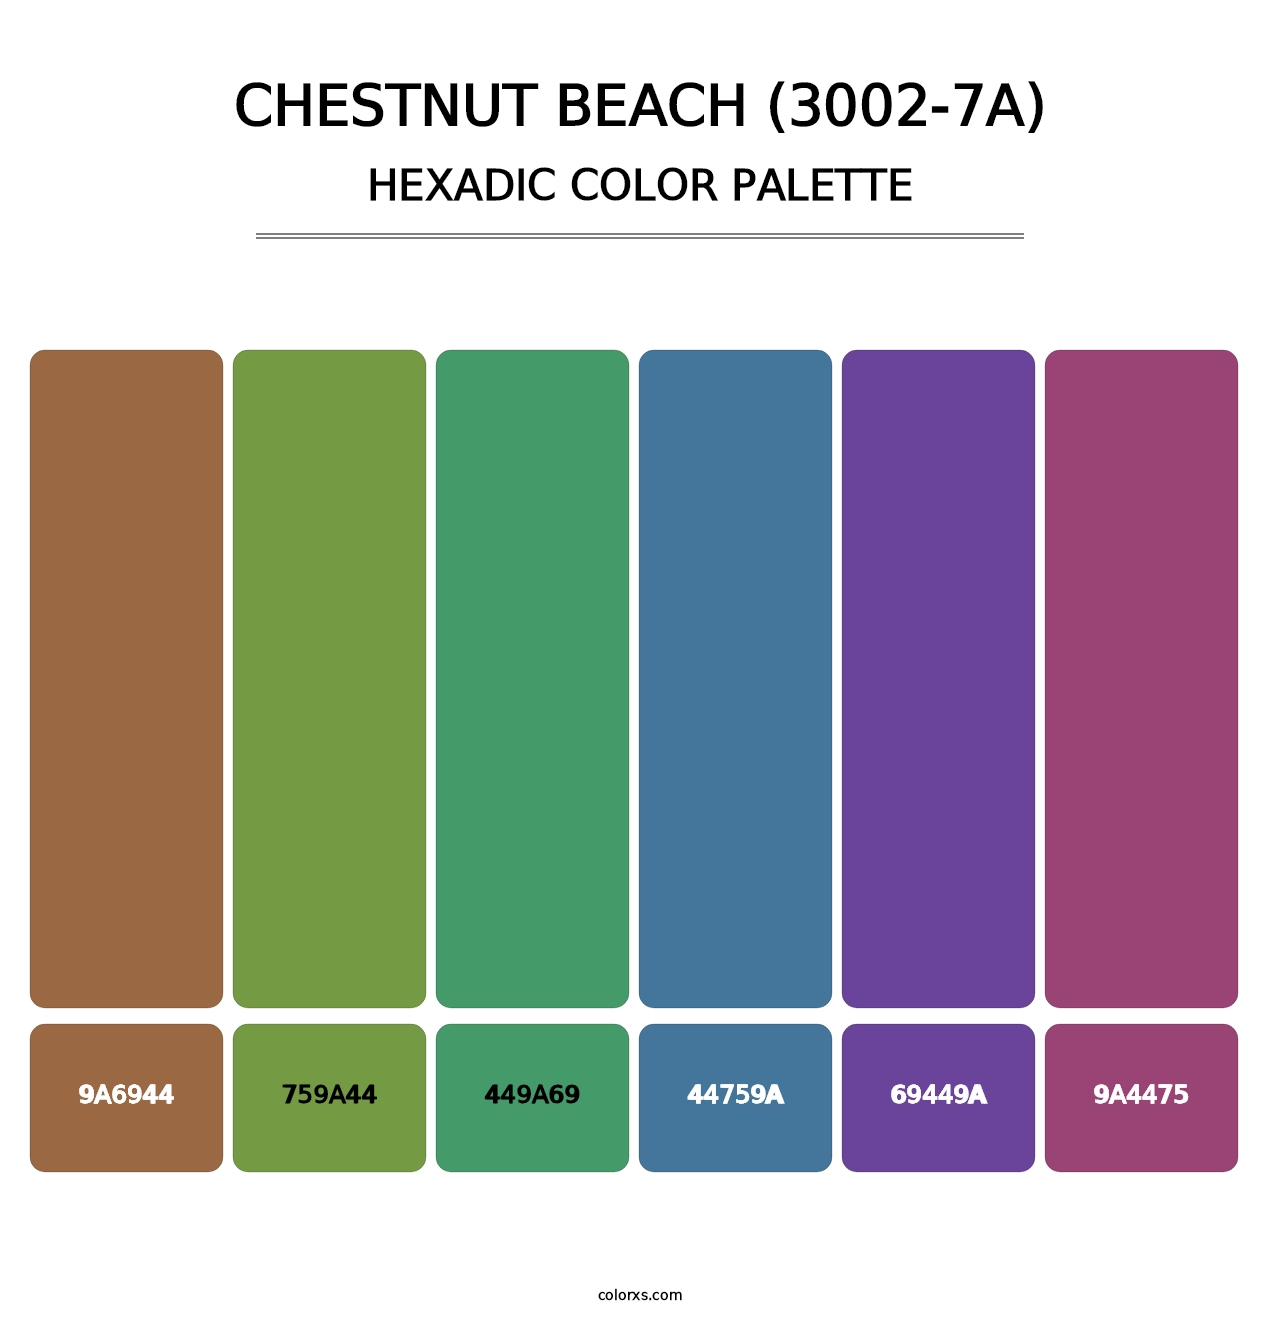 Chestnut Beach (3002-7A) - Hexadic Color Palette